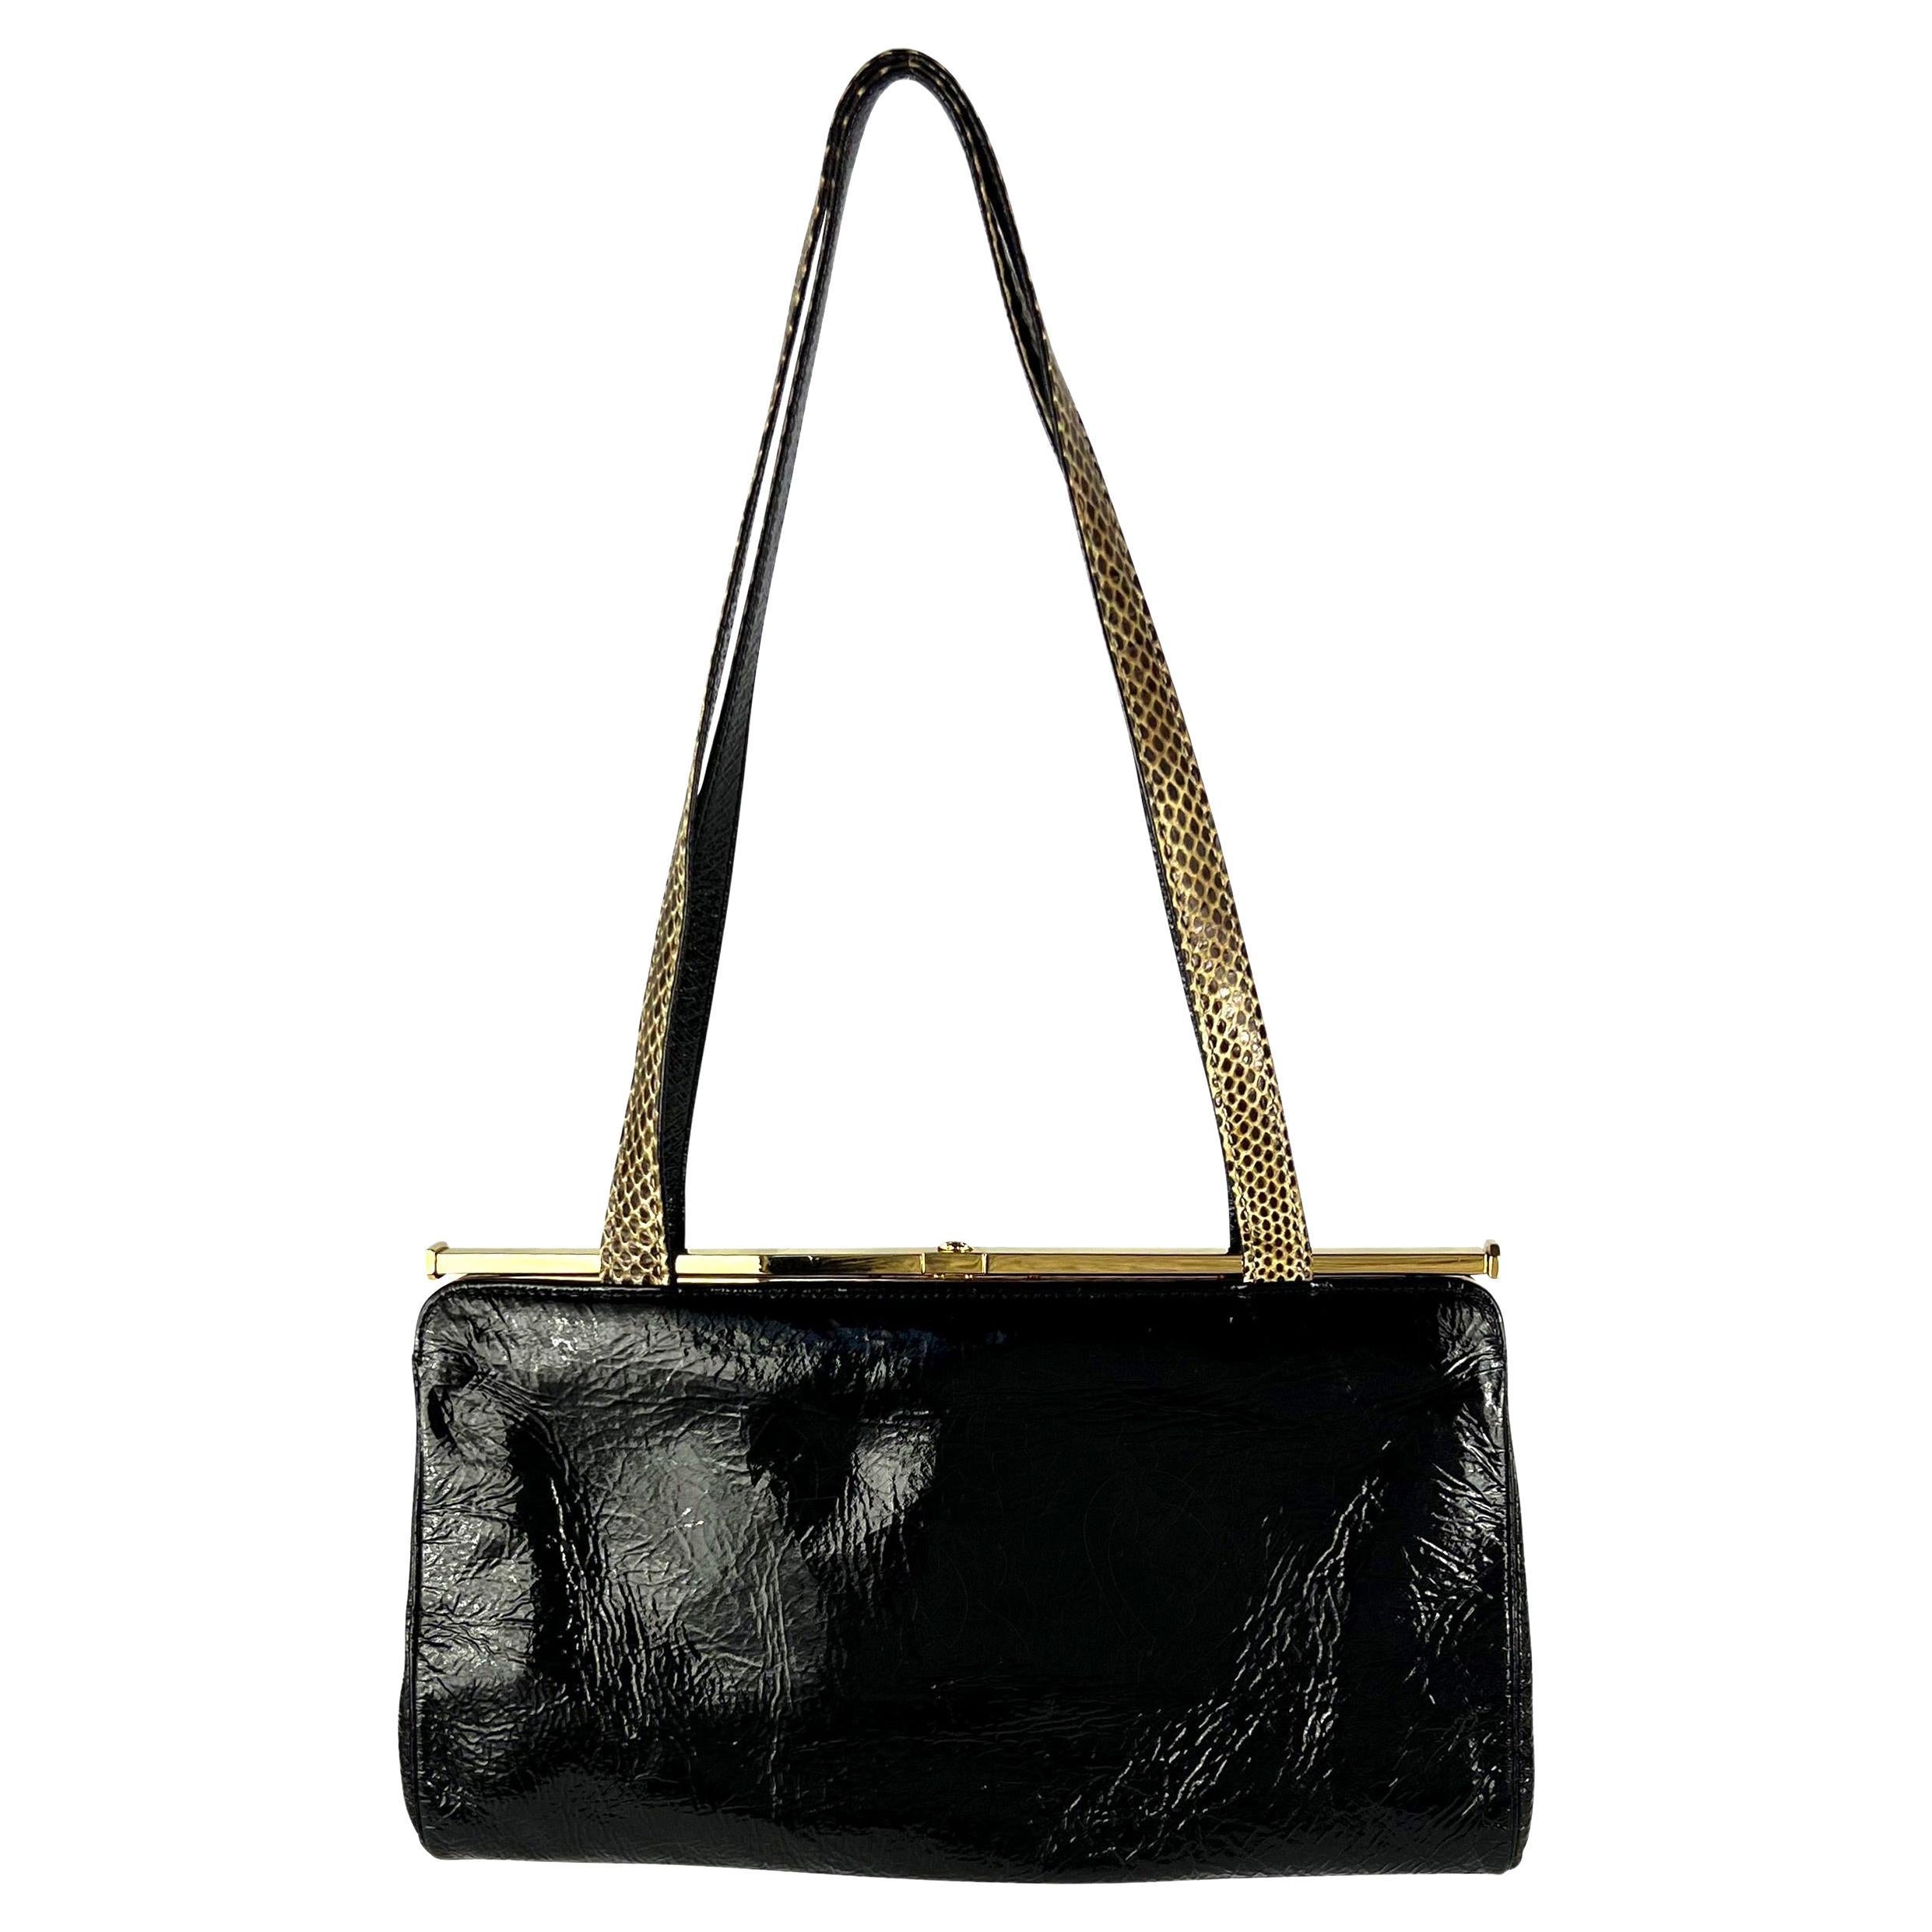 Versace La Medusa Small Handbag | Top handle bag, Versace, Small handbags